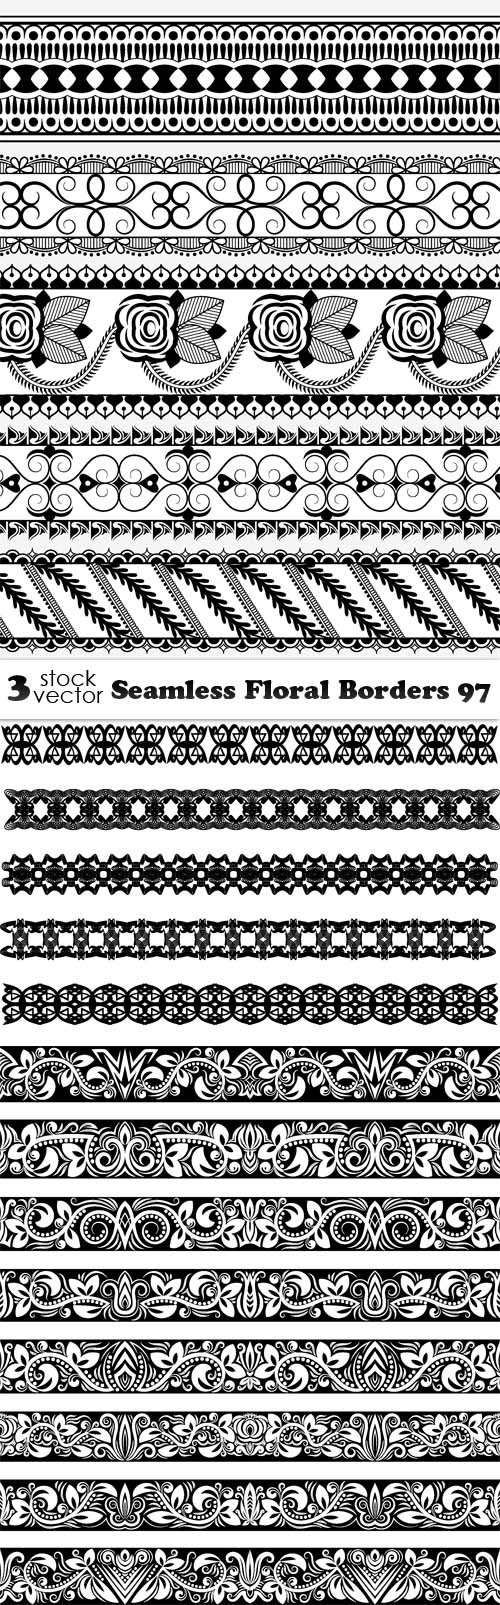 Vectors - Seamless Floral Borders 97